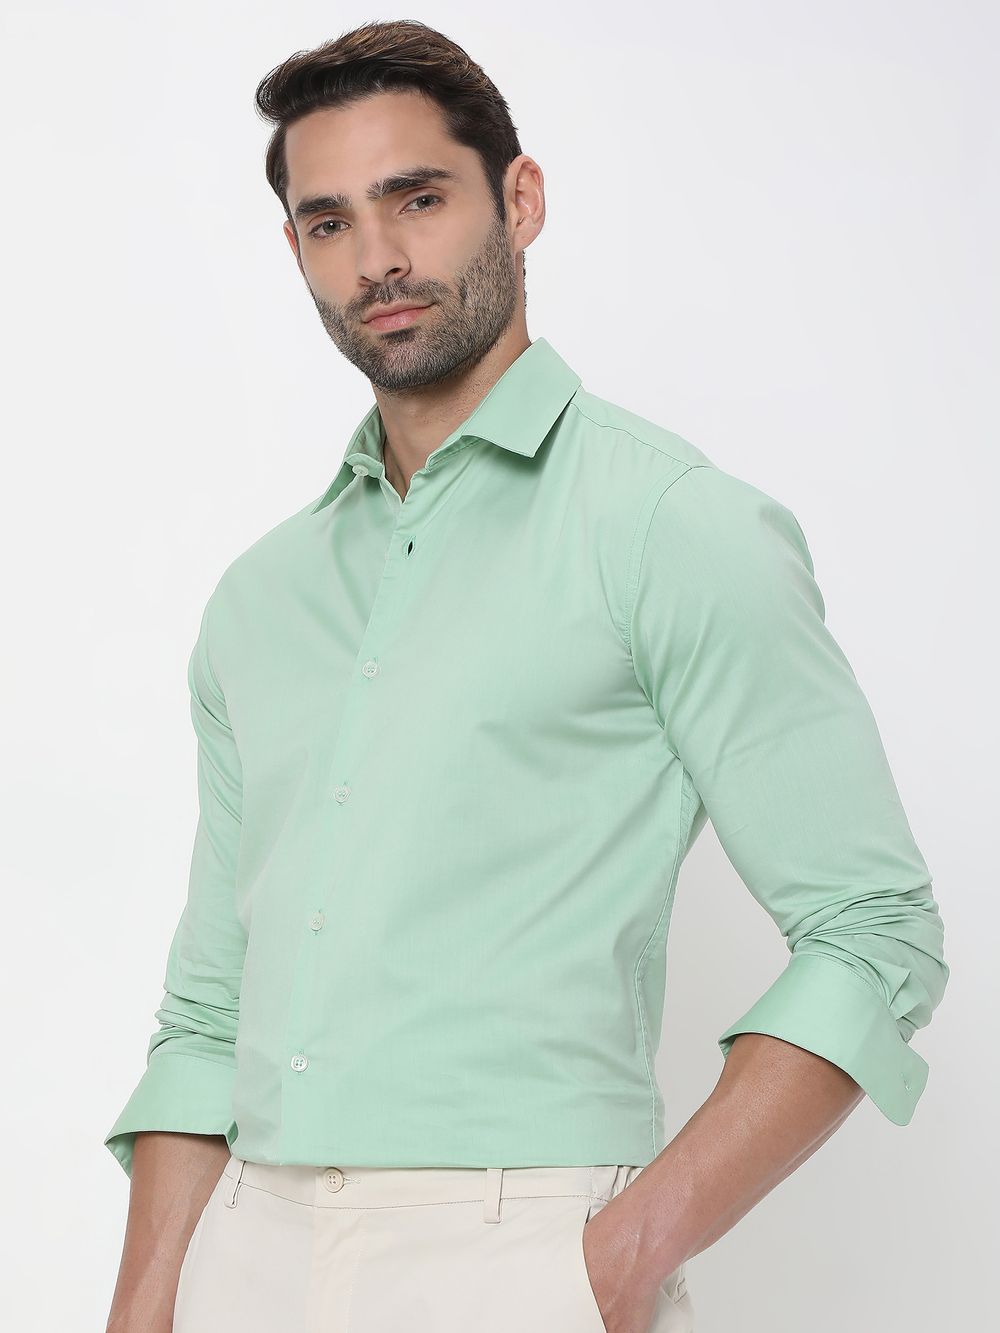 Light Green Stretch Plain Slim Fit Casual Shirt